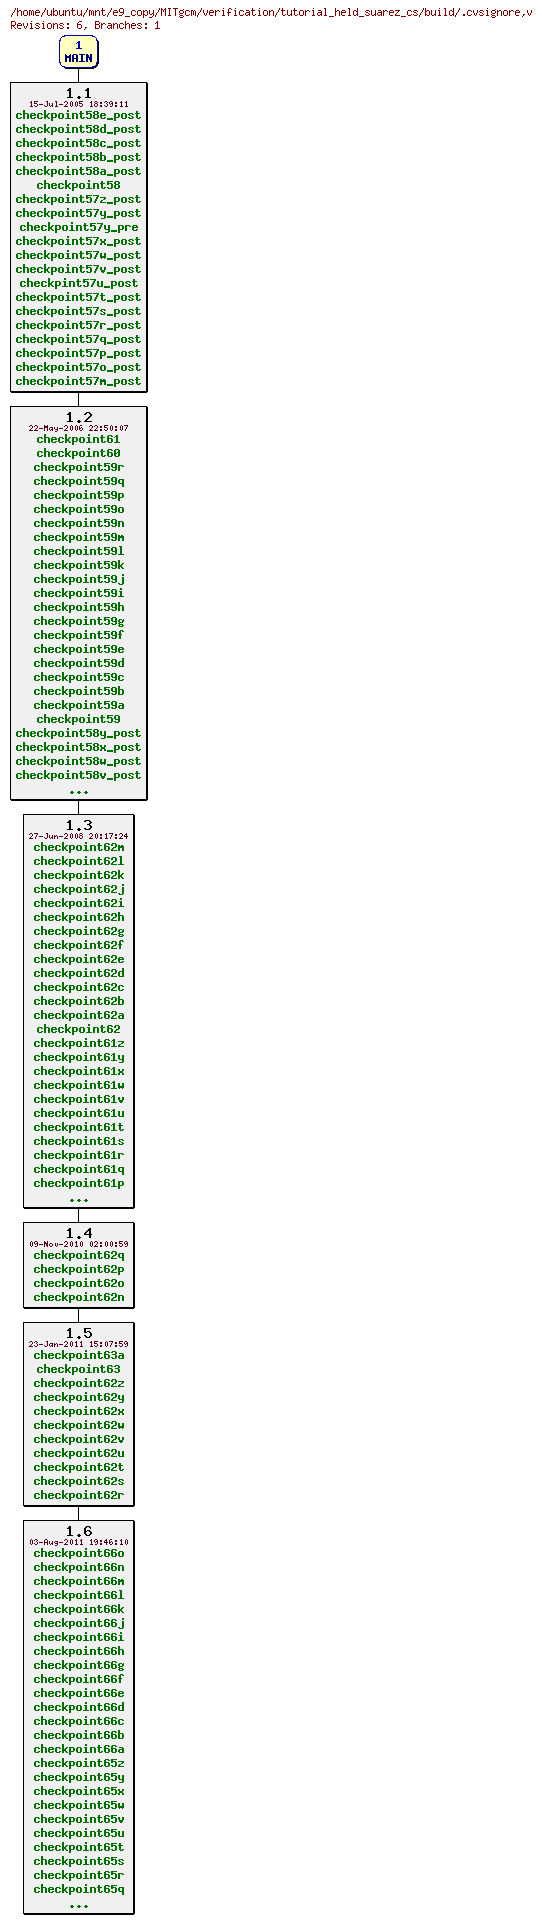 Revisions of MITgcm/verification/tutorial_held_suarez_cs/build/.cvsignore